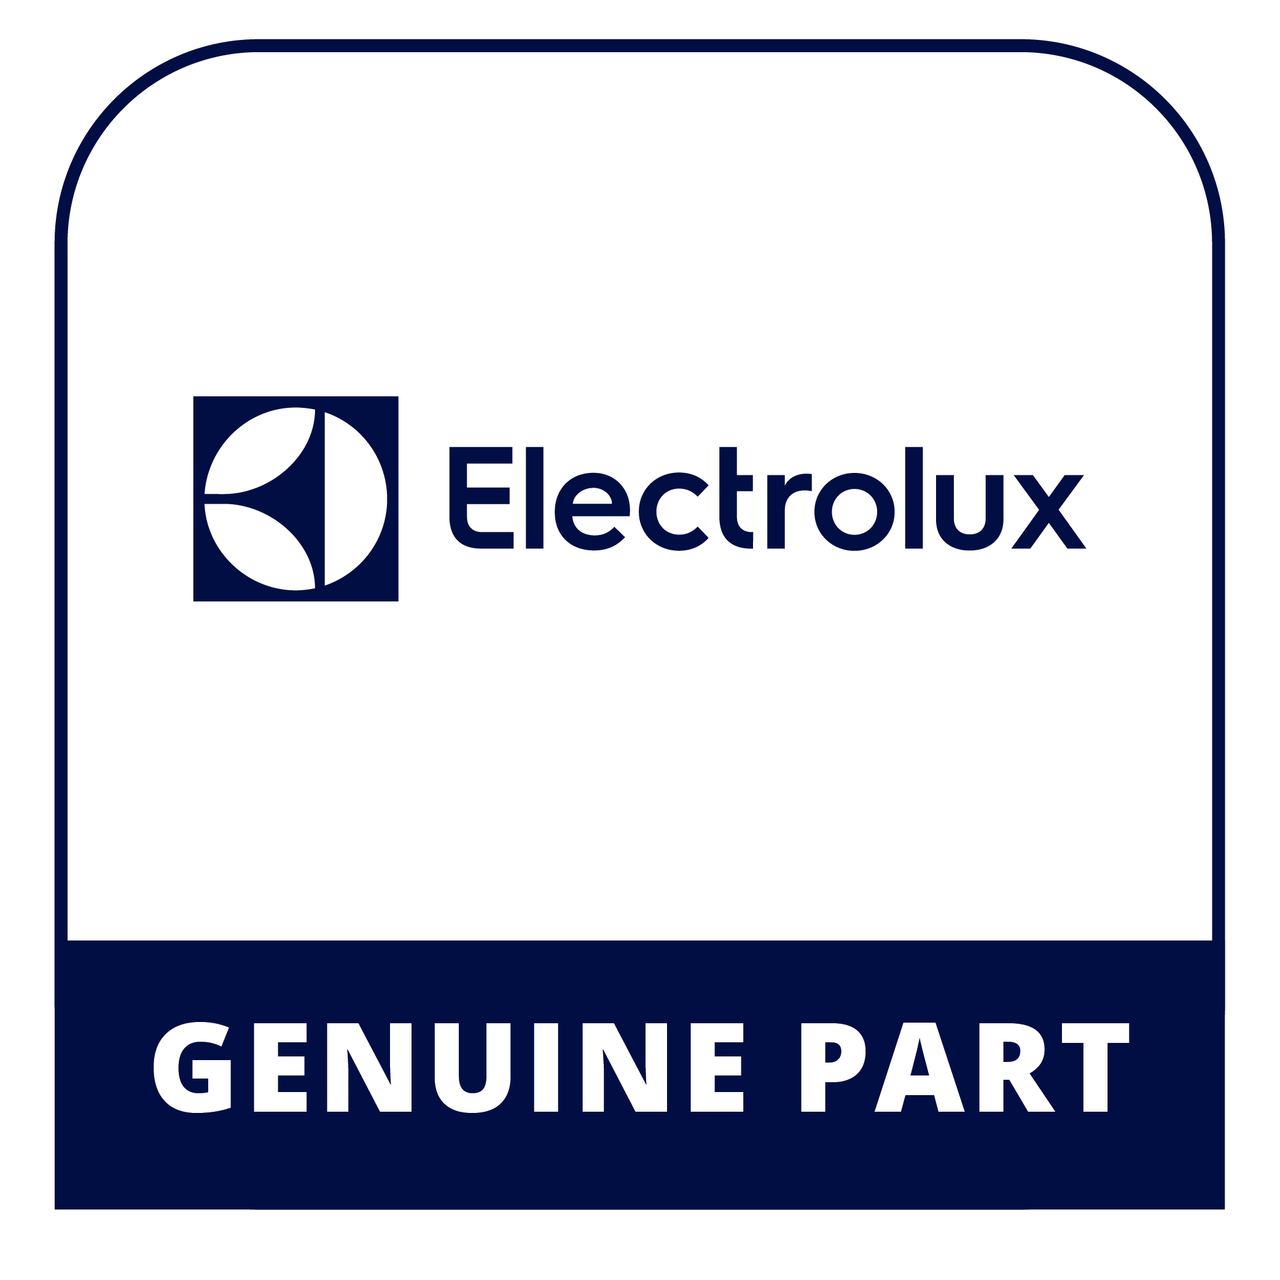 Frigidaire - Electrolux 318214601 - Overlay - Genuine Electrolux Part